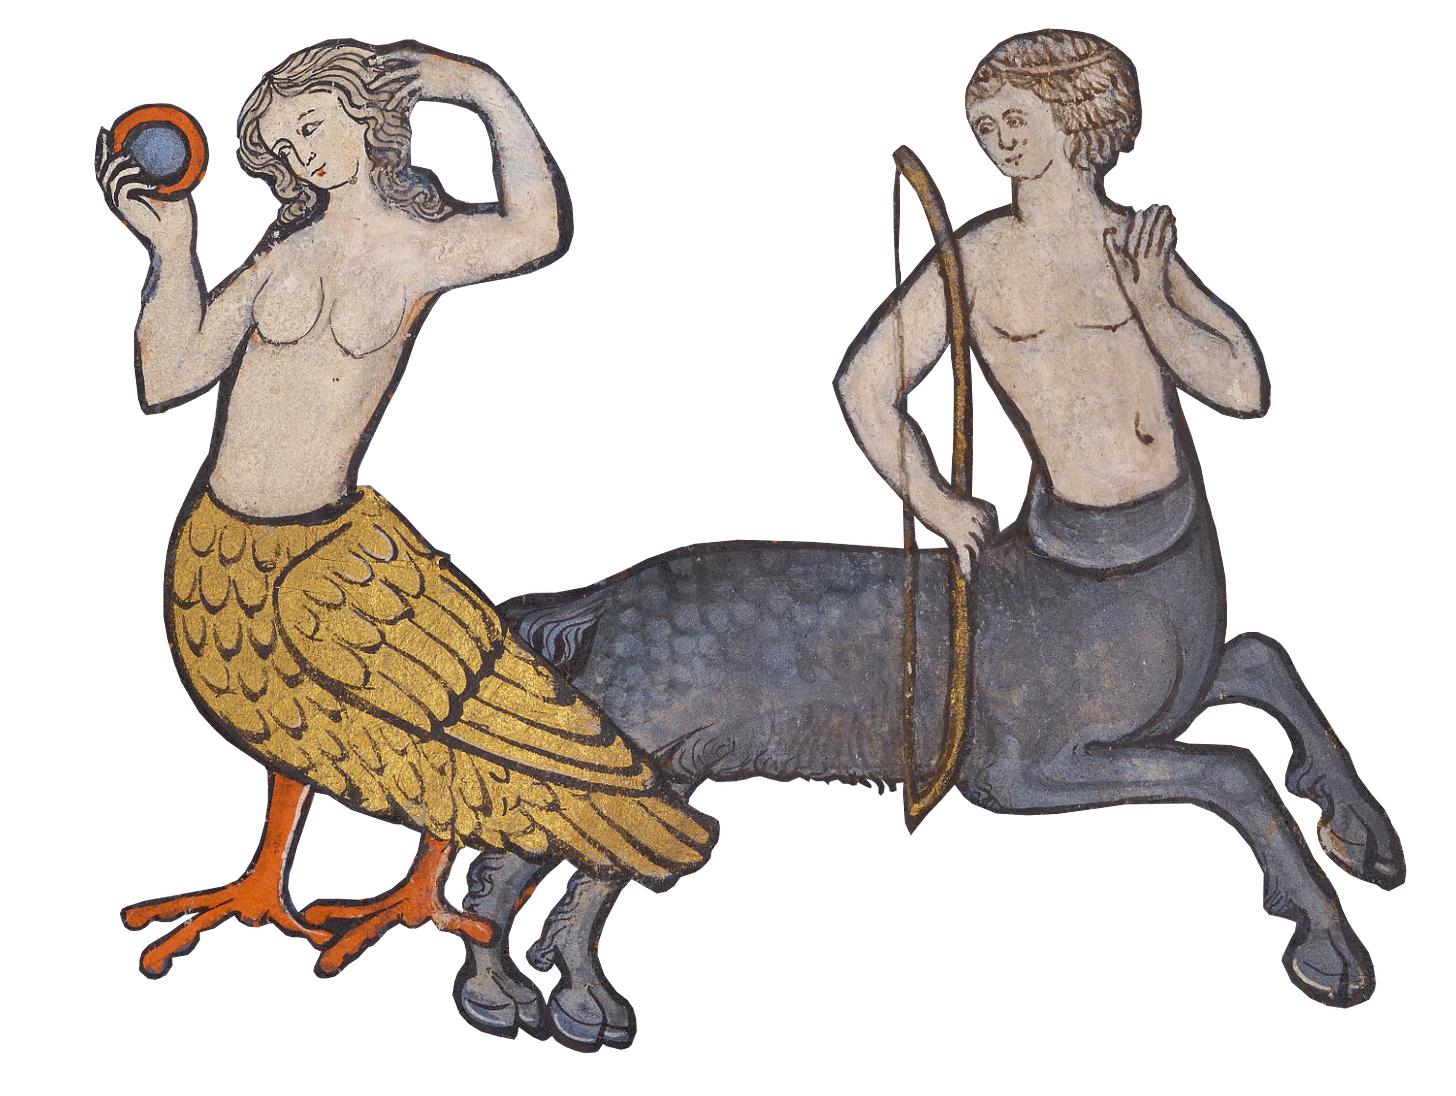 A siren and a centaur, cut out from an illuminated manuscript.